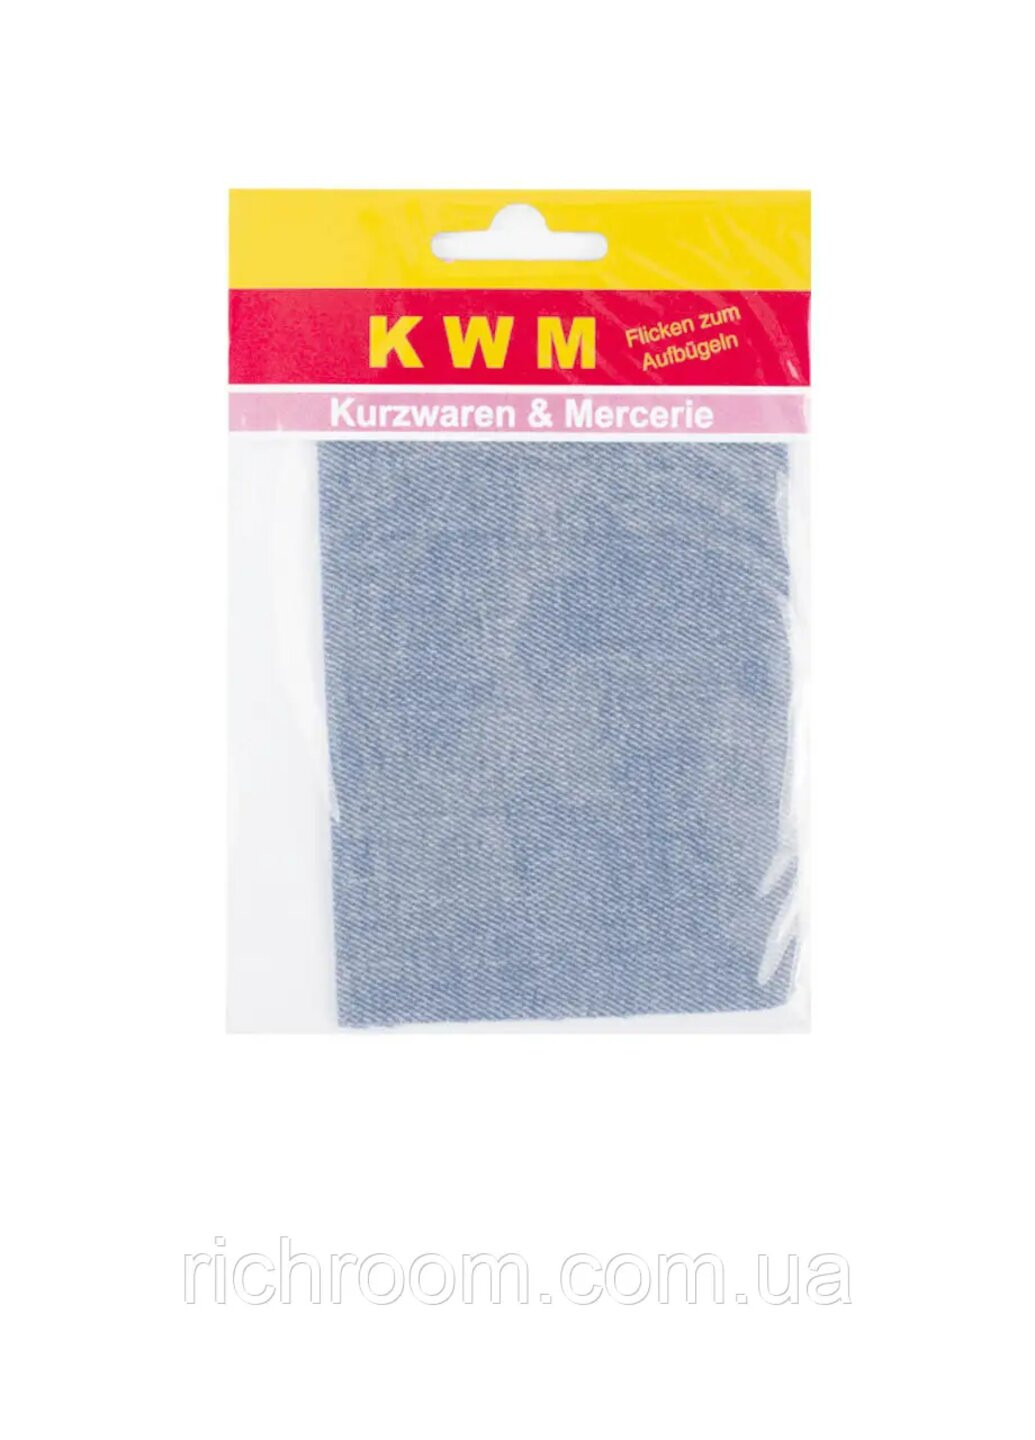 Термонаклейка на одежду голубого цвета KWM (259829725)